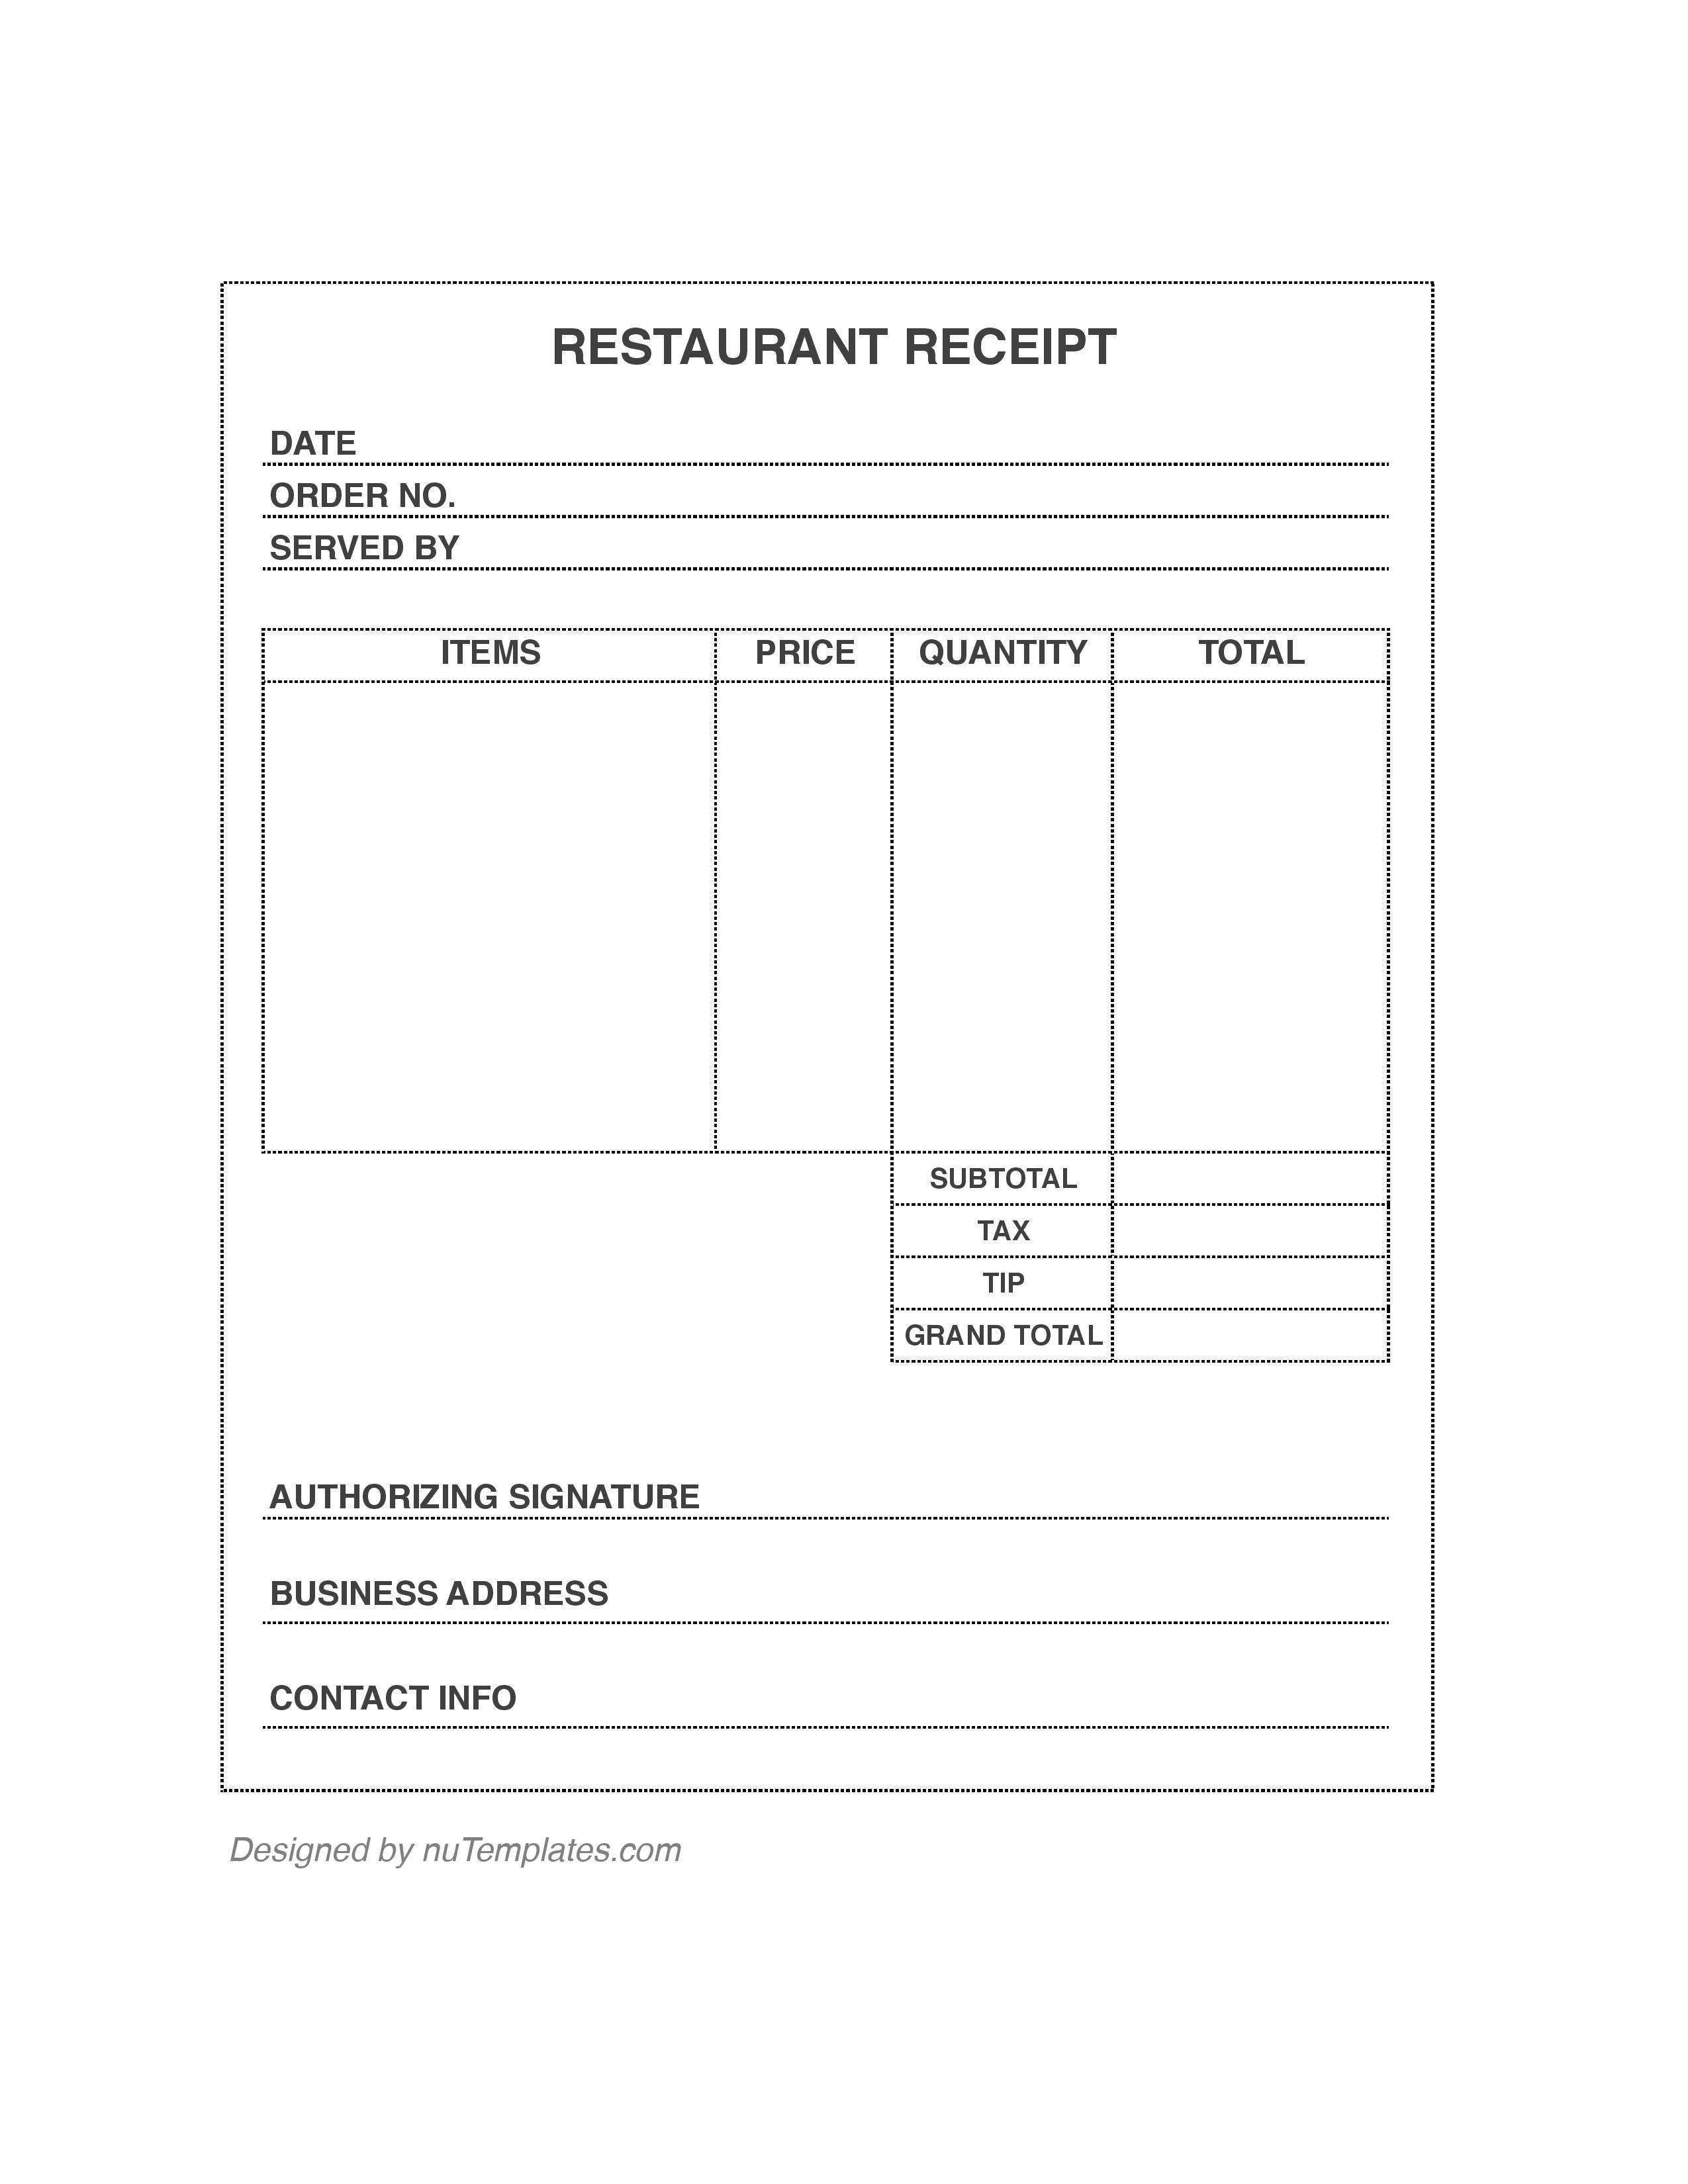 Restaurant Receipt Template Restaurant Receipts nuTemplates